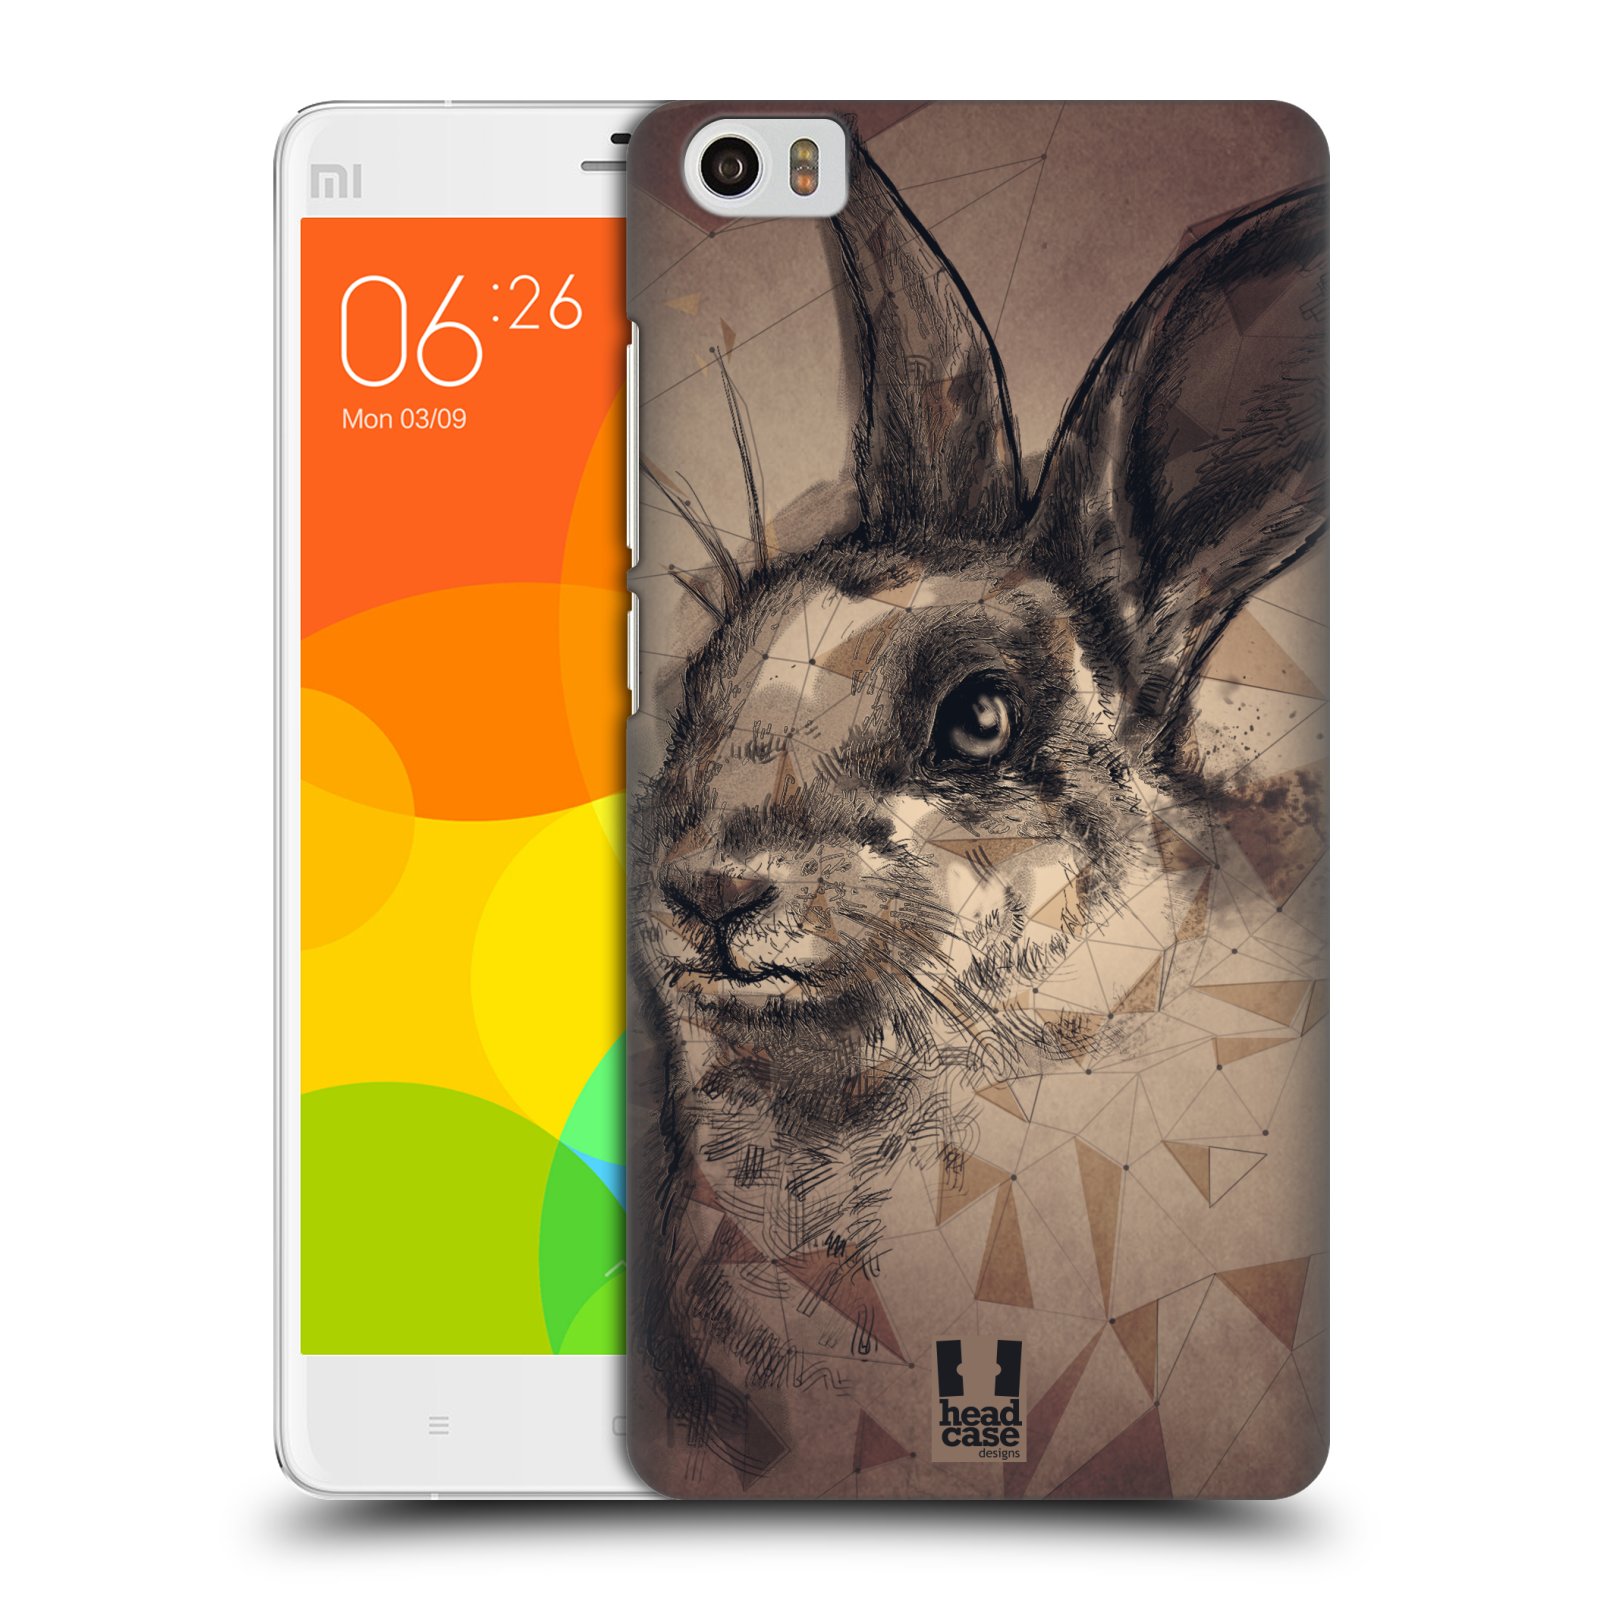 HEAD CASE pevný plastový obal na mobil XIAOMI Mi Note vzor Skica zvíře kreslené zajíc